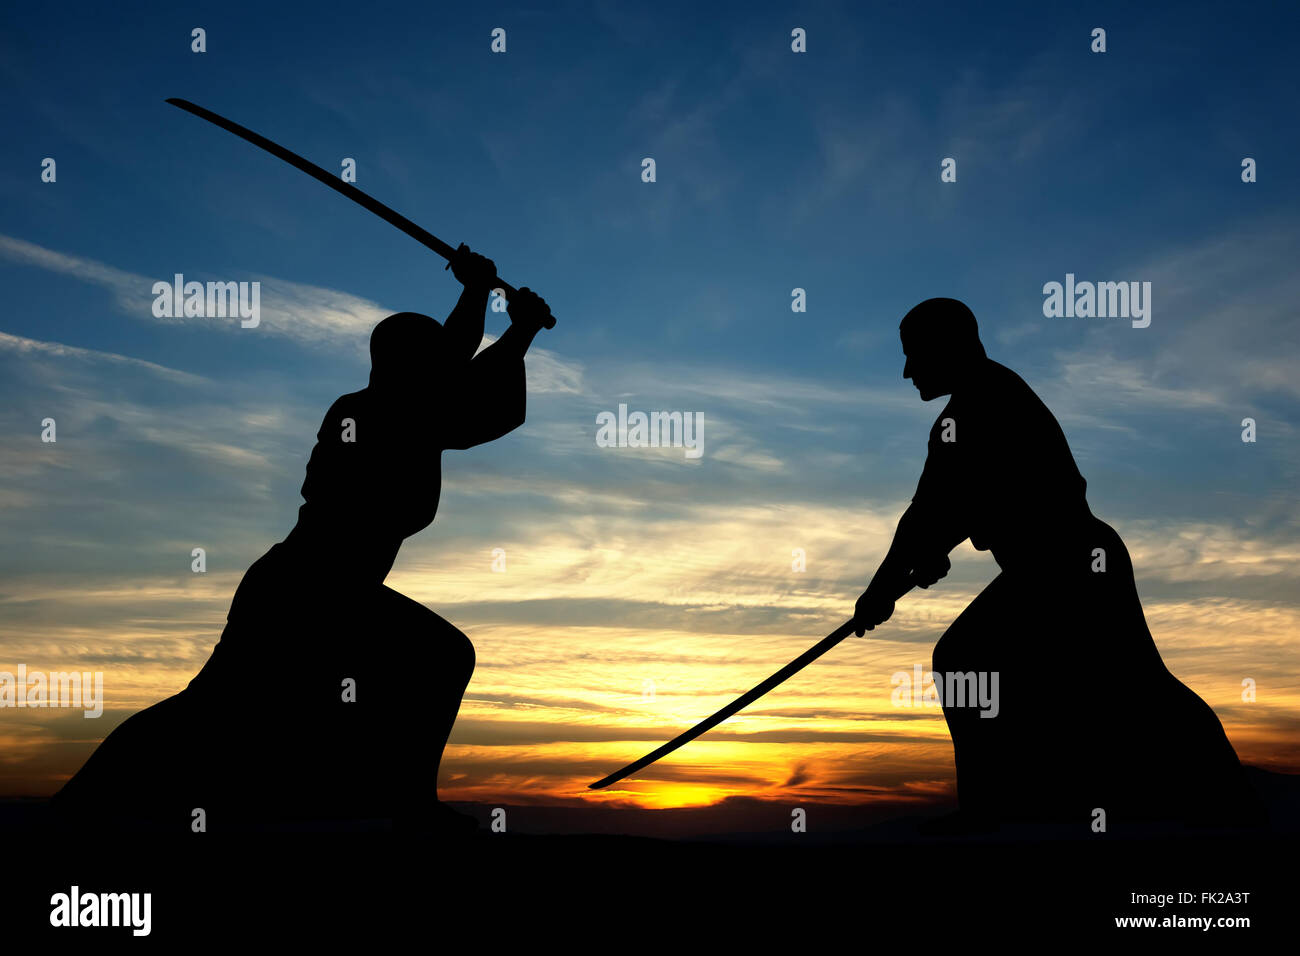 Martial art sword combat silhouettes illustration on sunset background Stock Photo